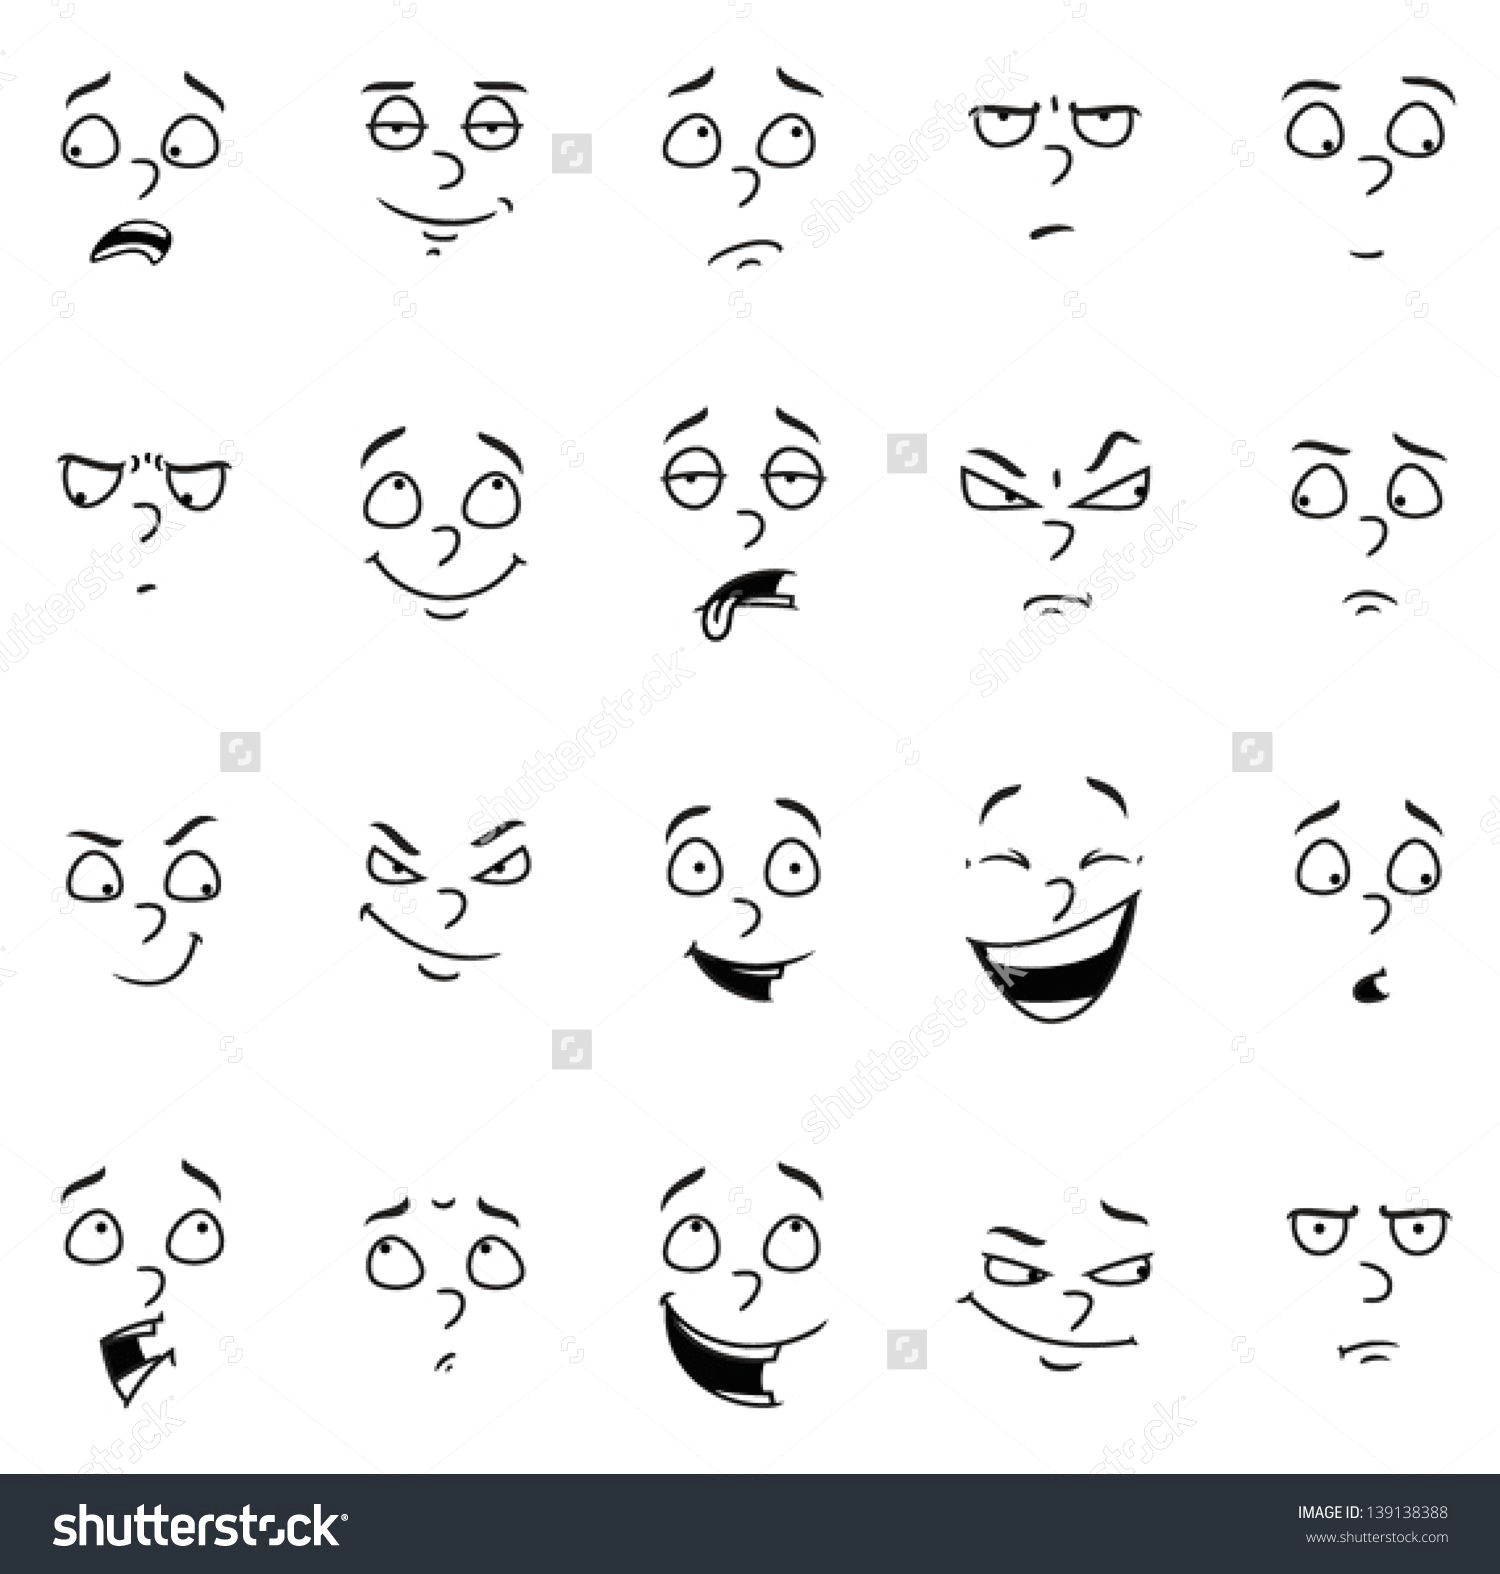 Drawing A Cartoon Eye Simple Woman Cartoon Facial Expressions Buscar Con Google Art